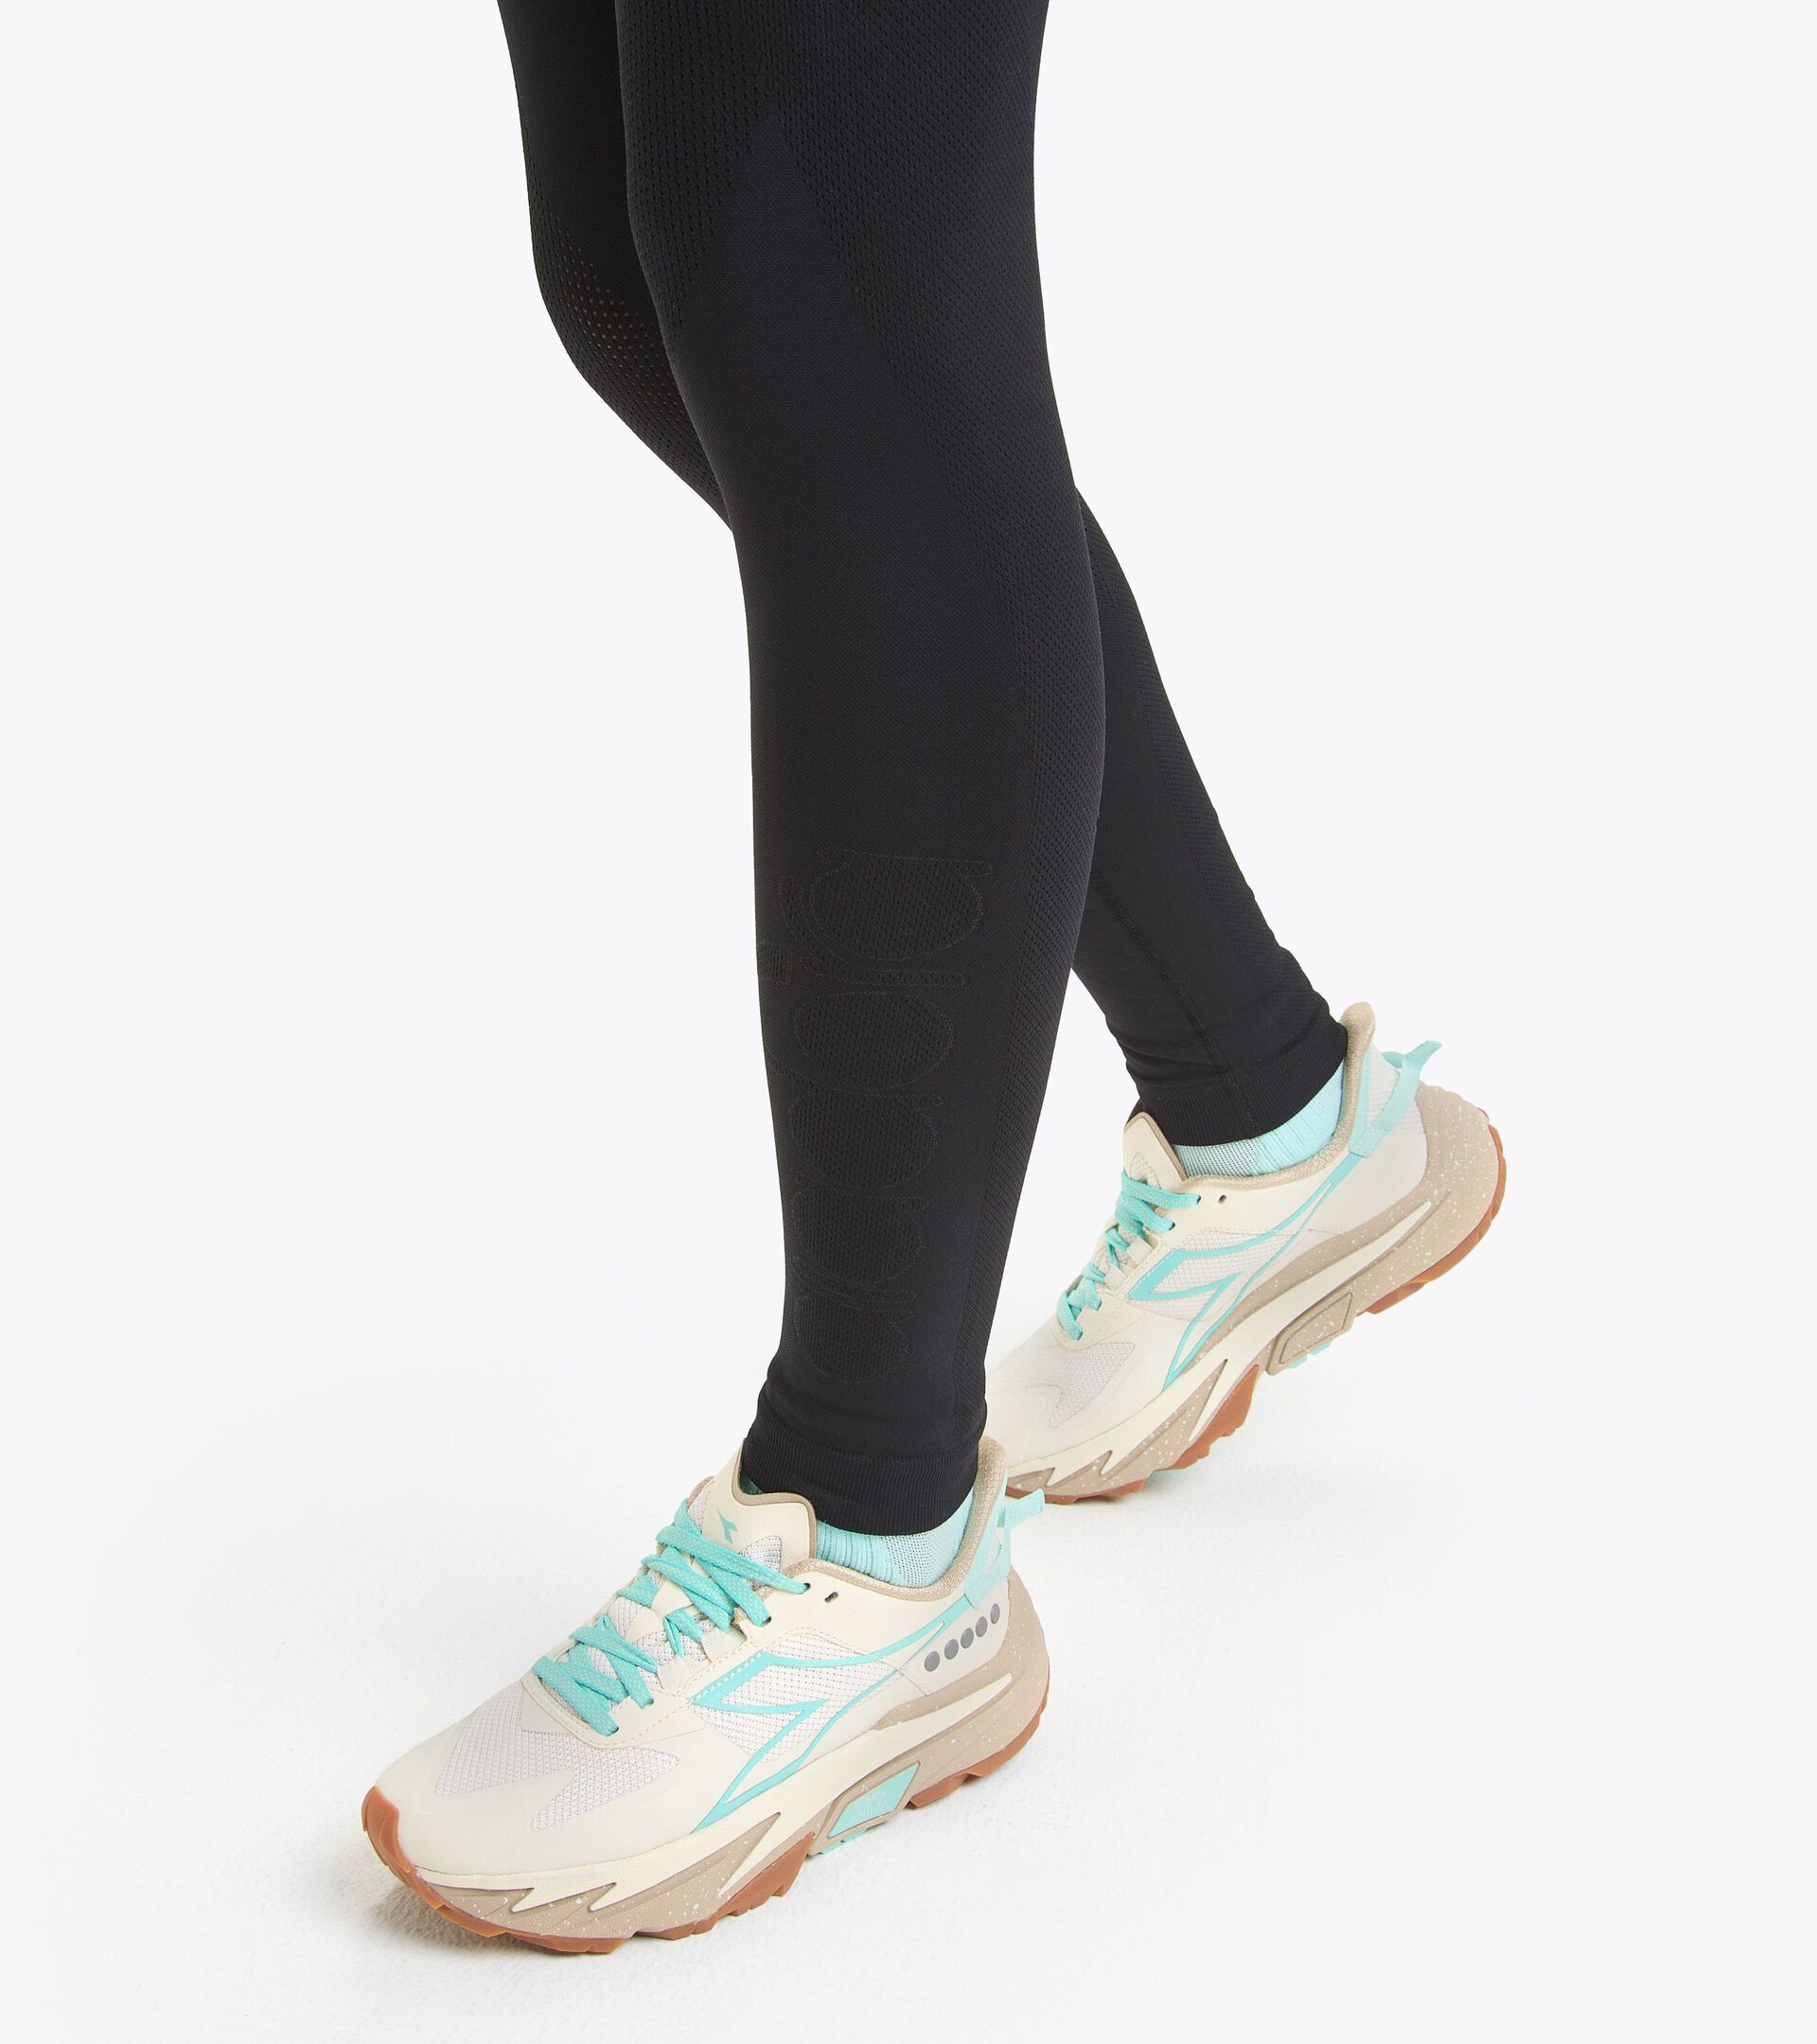 L. TIGHTS RUN CREW Running leggings - Women - Diadora Online Store CA